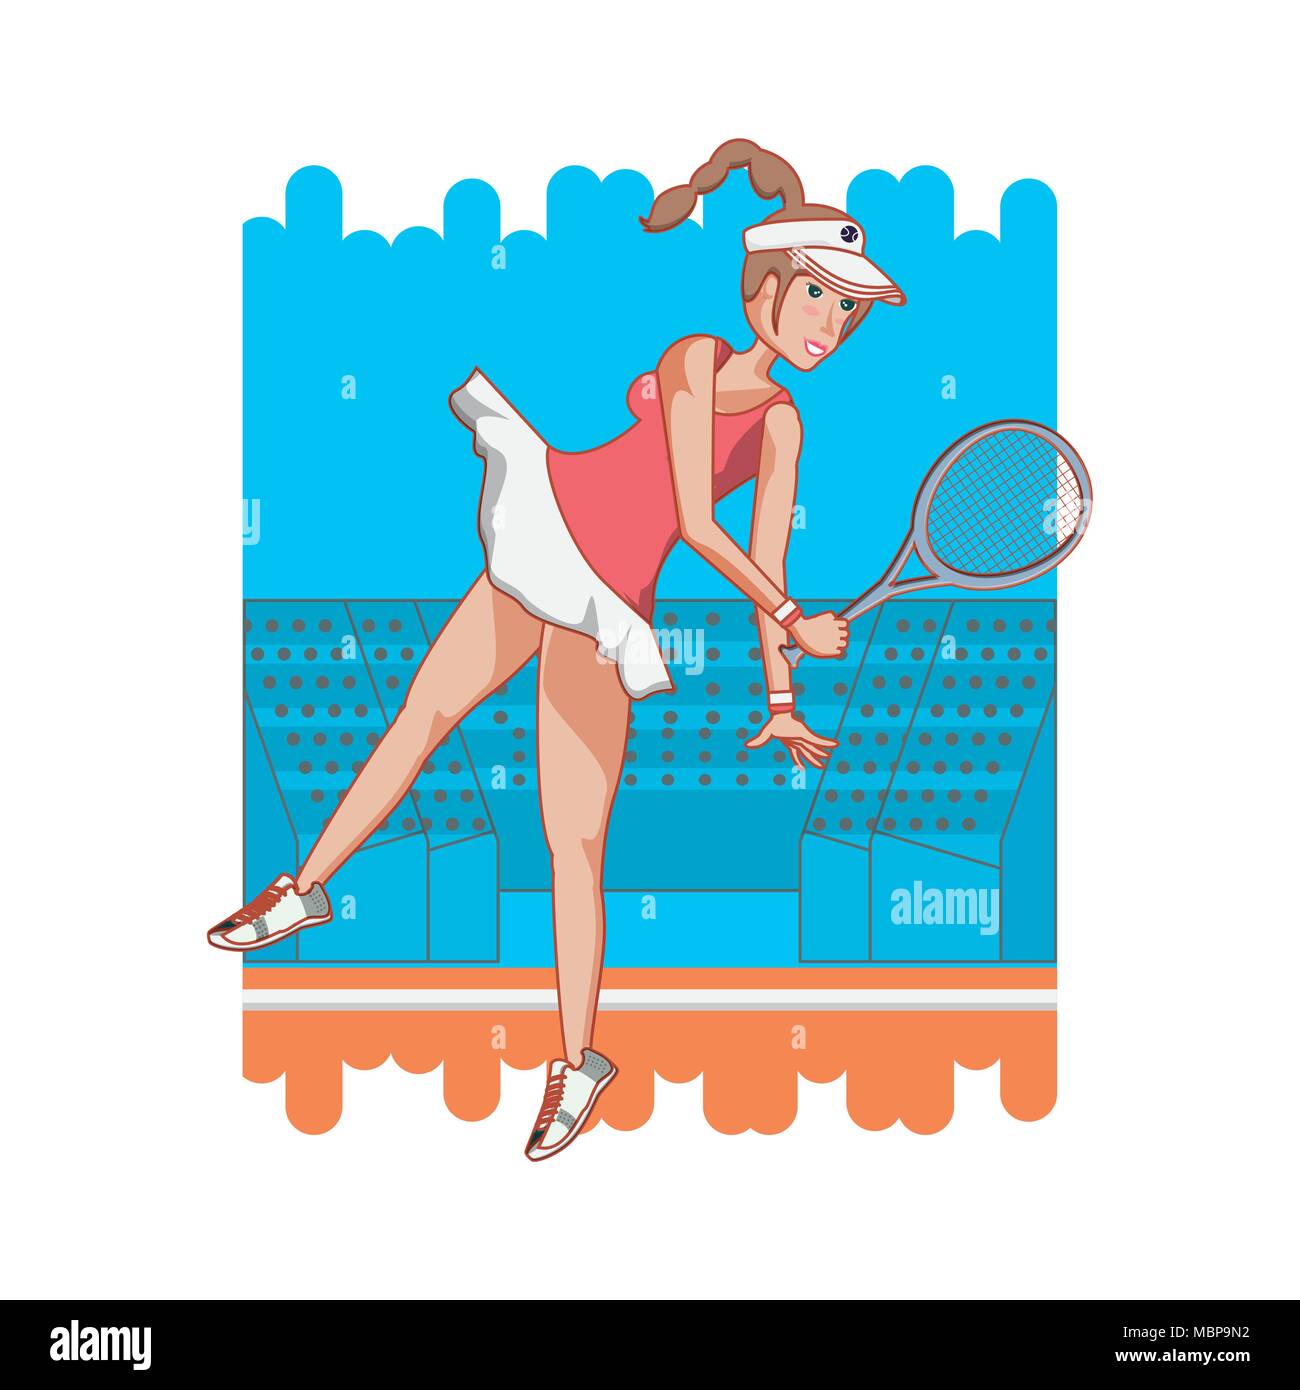 Donna giocando a tennis carattere illustrazione vettoriale design Illustrazione Vettoriale